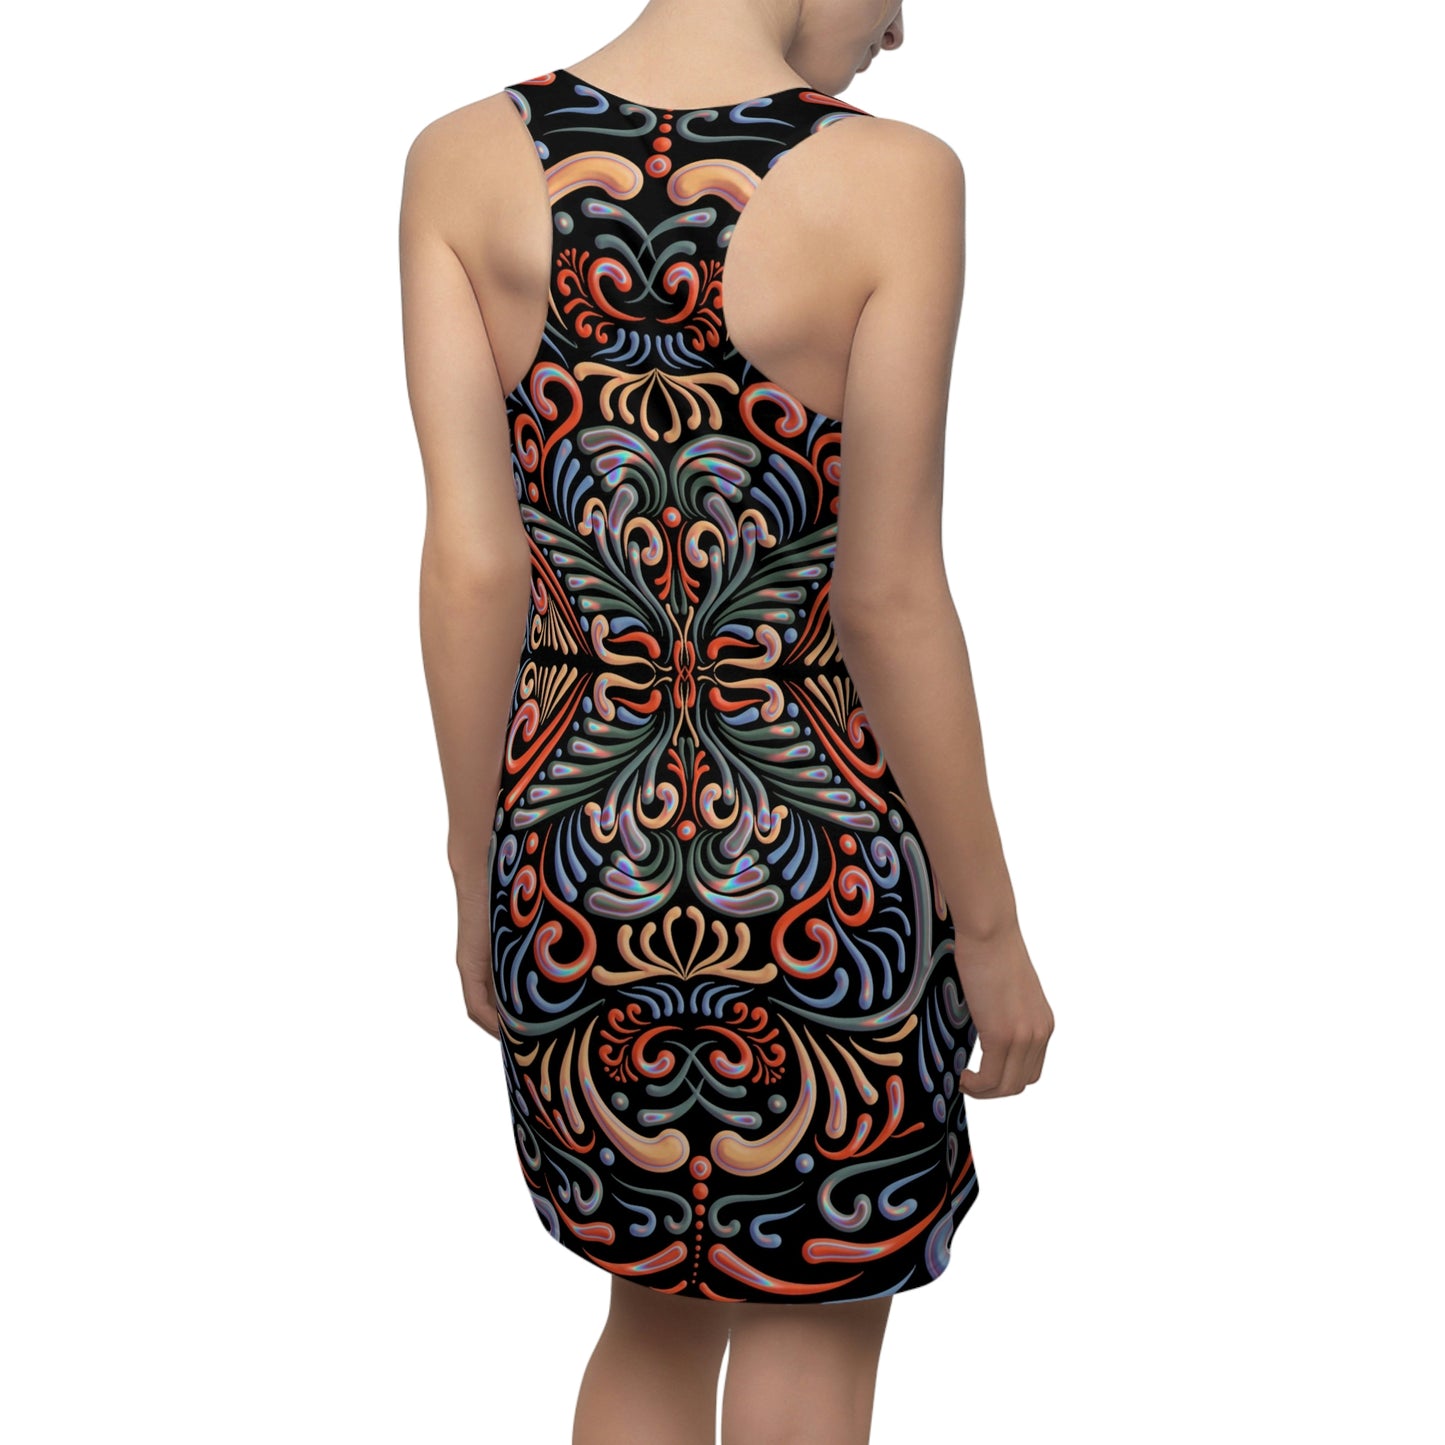 Portal 62 Women's Cut & Sew Racerback Dress